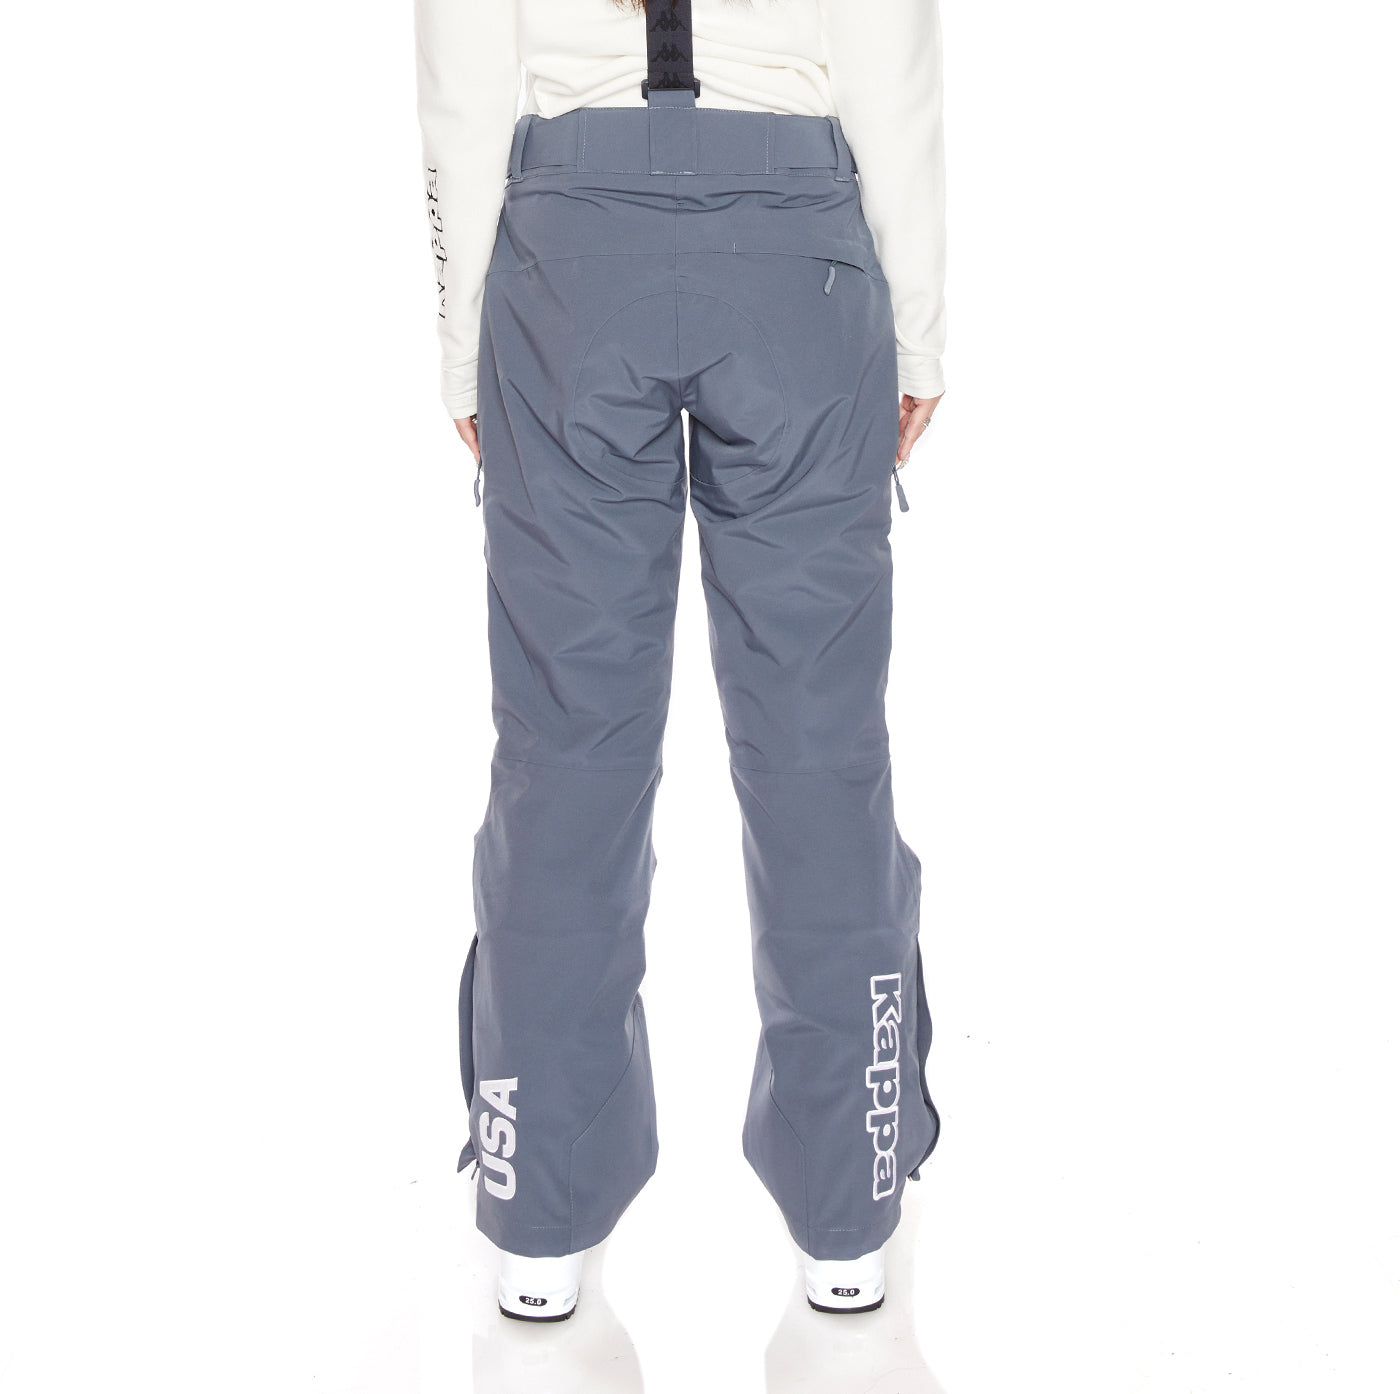 Kappa Pants for Women | eBay